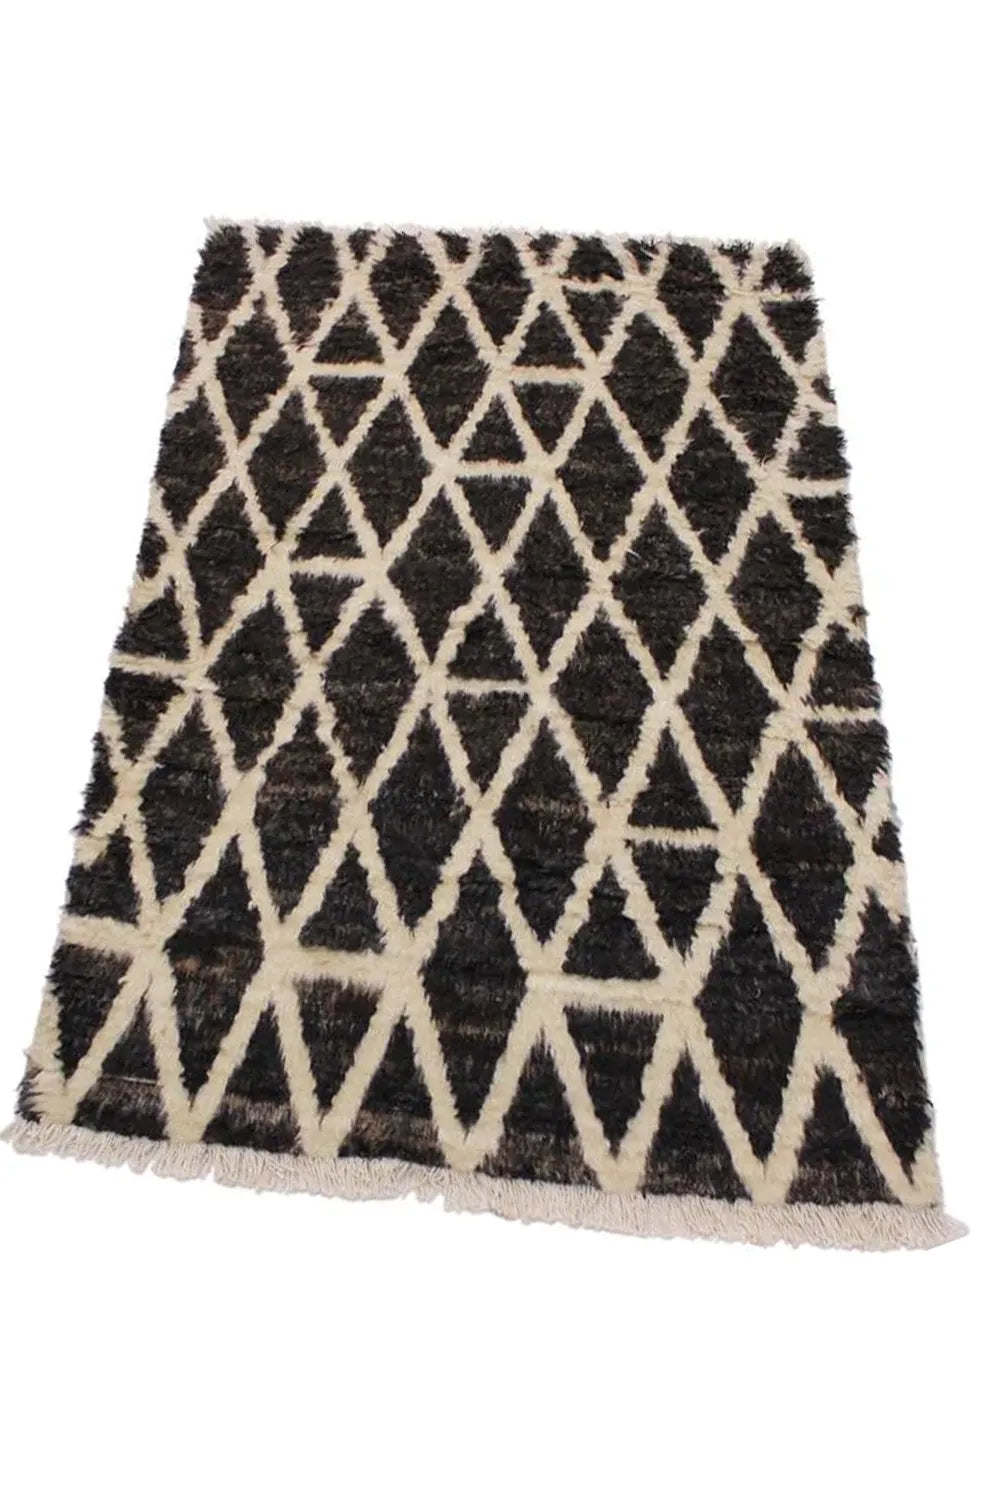 Modern Moroccan elegance captured in a plush black and white shag rug.